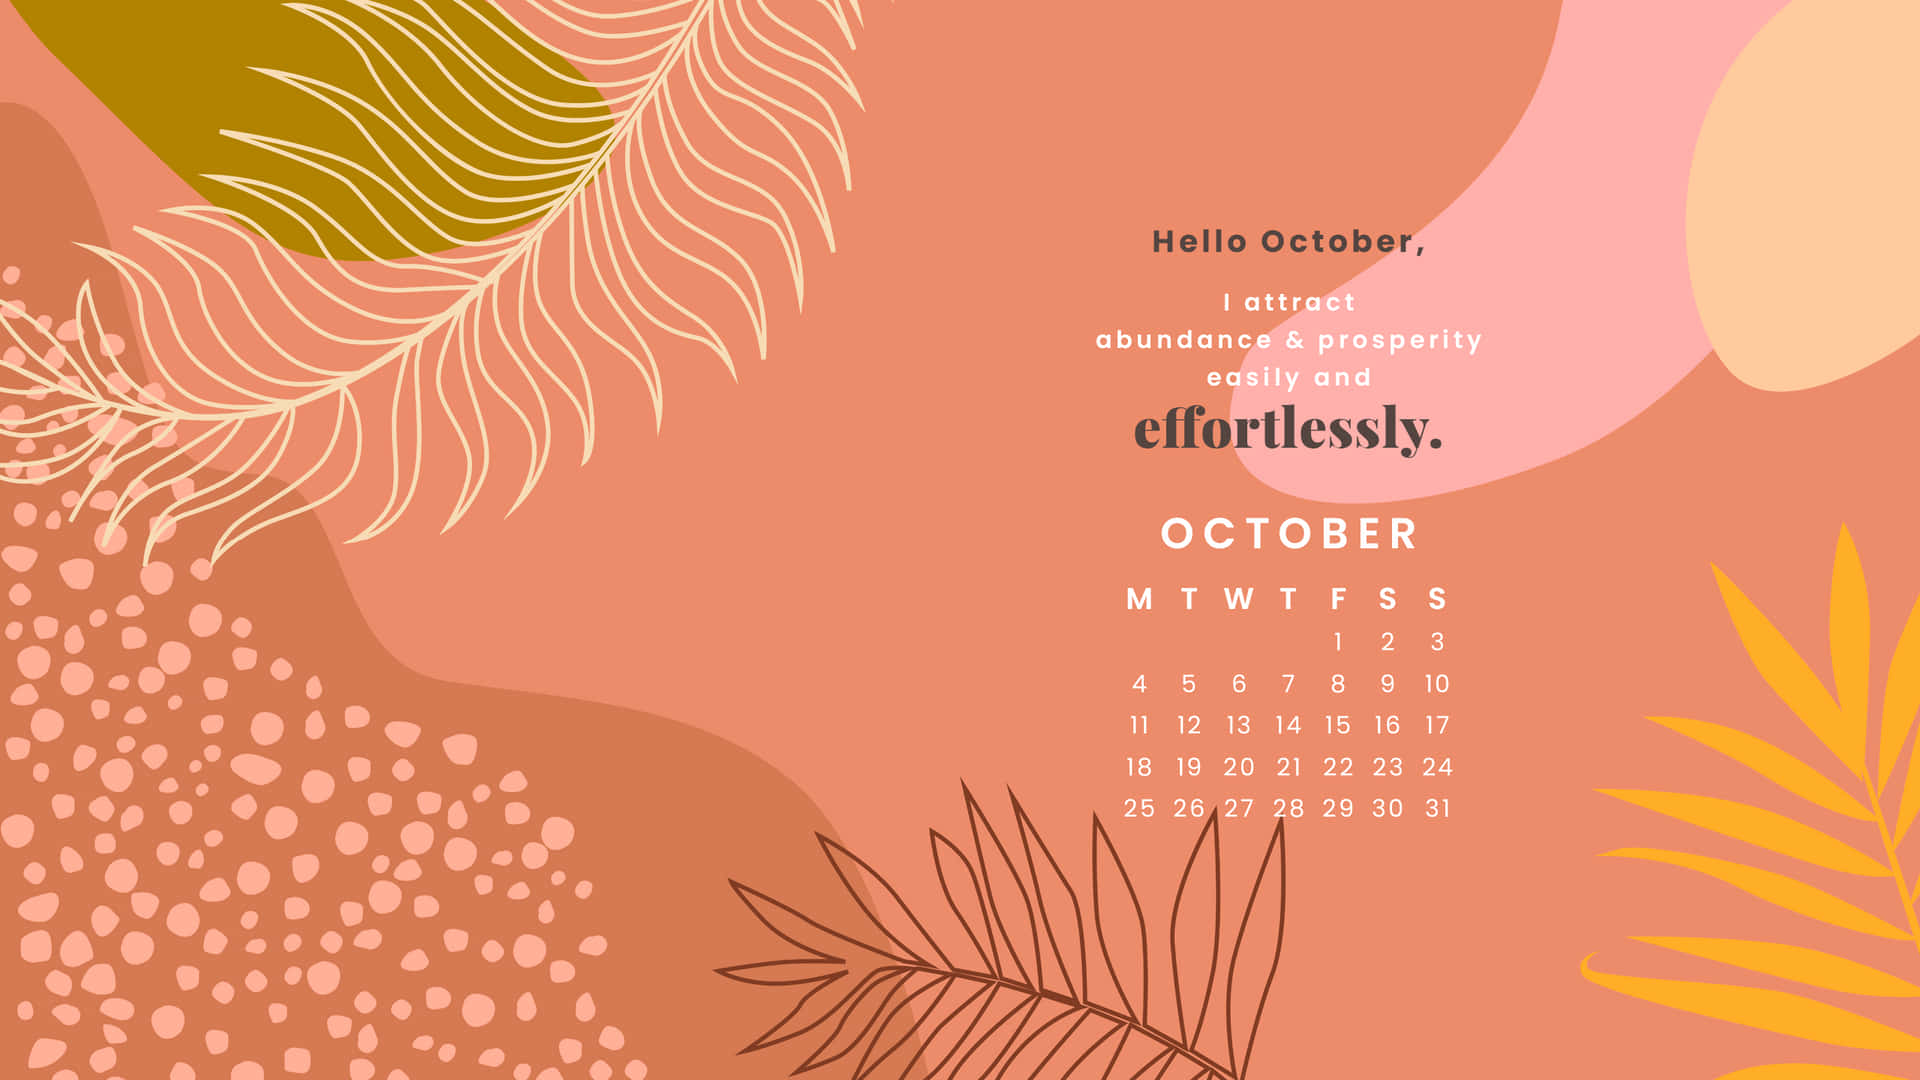 A Pink And Orange Calendar With A Leaf Design Wallpaper